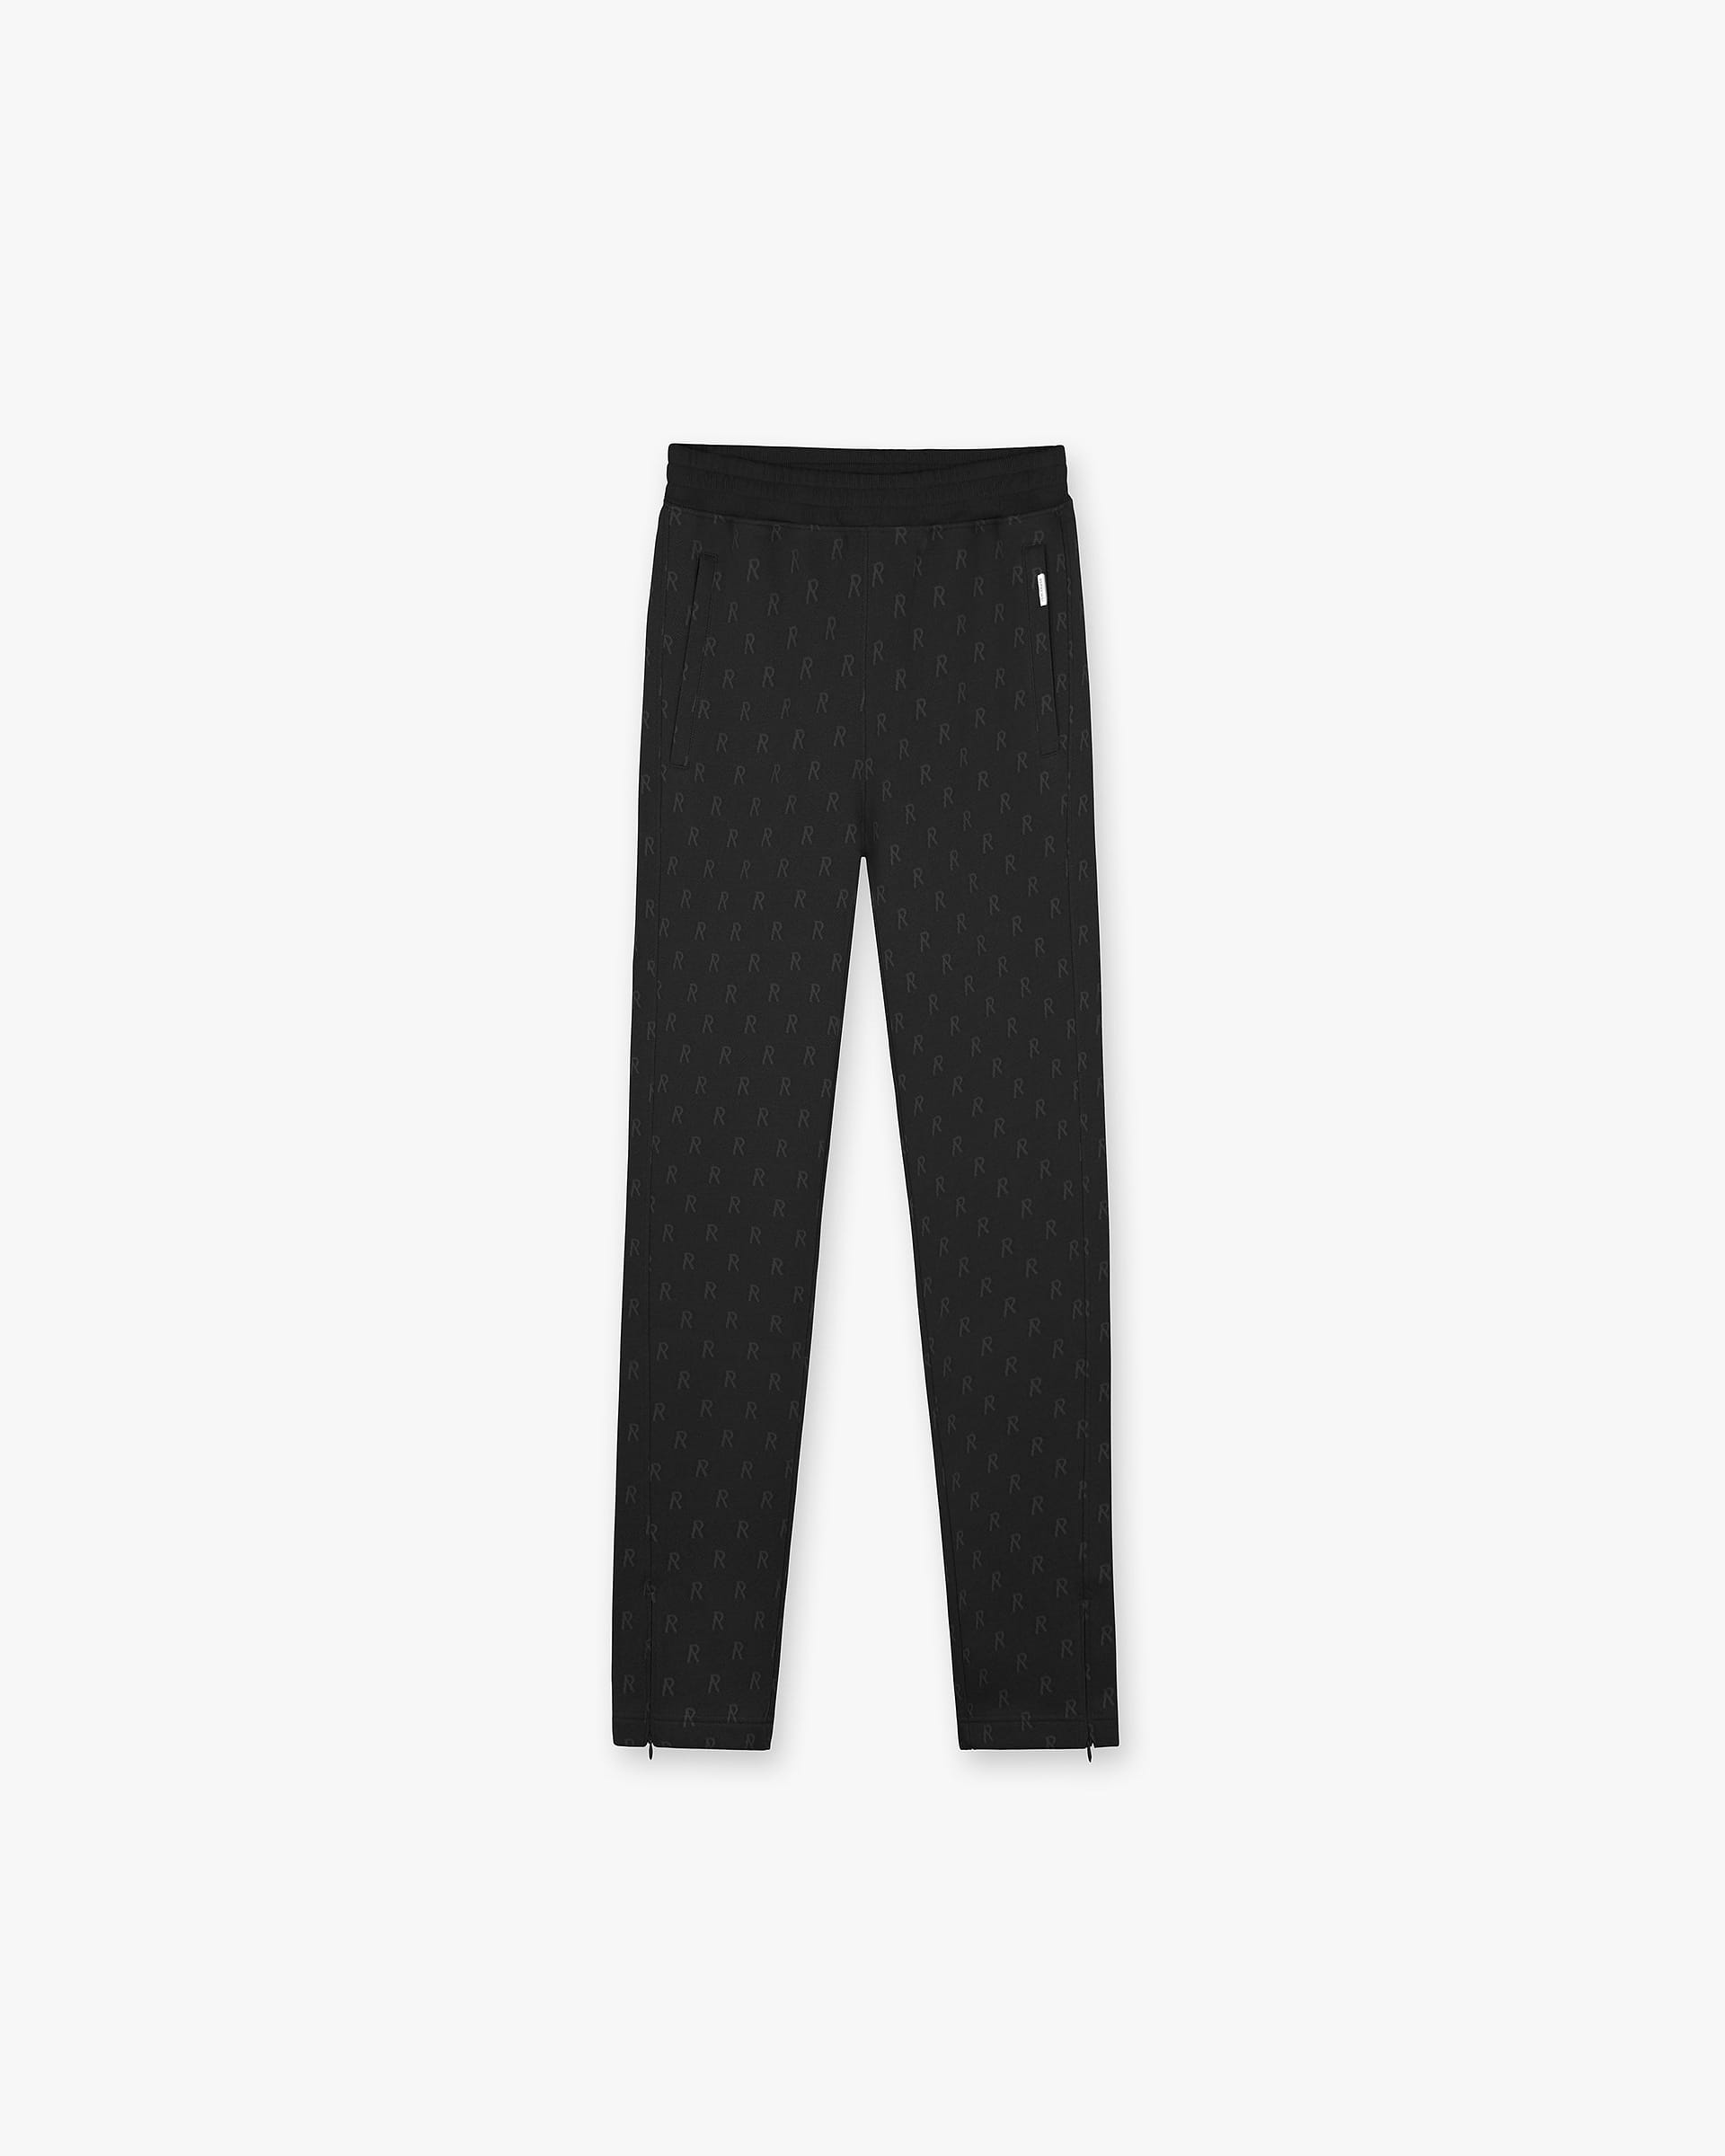 Intarsia Initial Sweatpant | Off Black Pants FW22 | Represent Clo